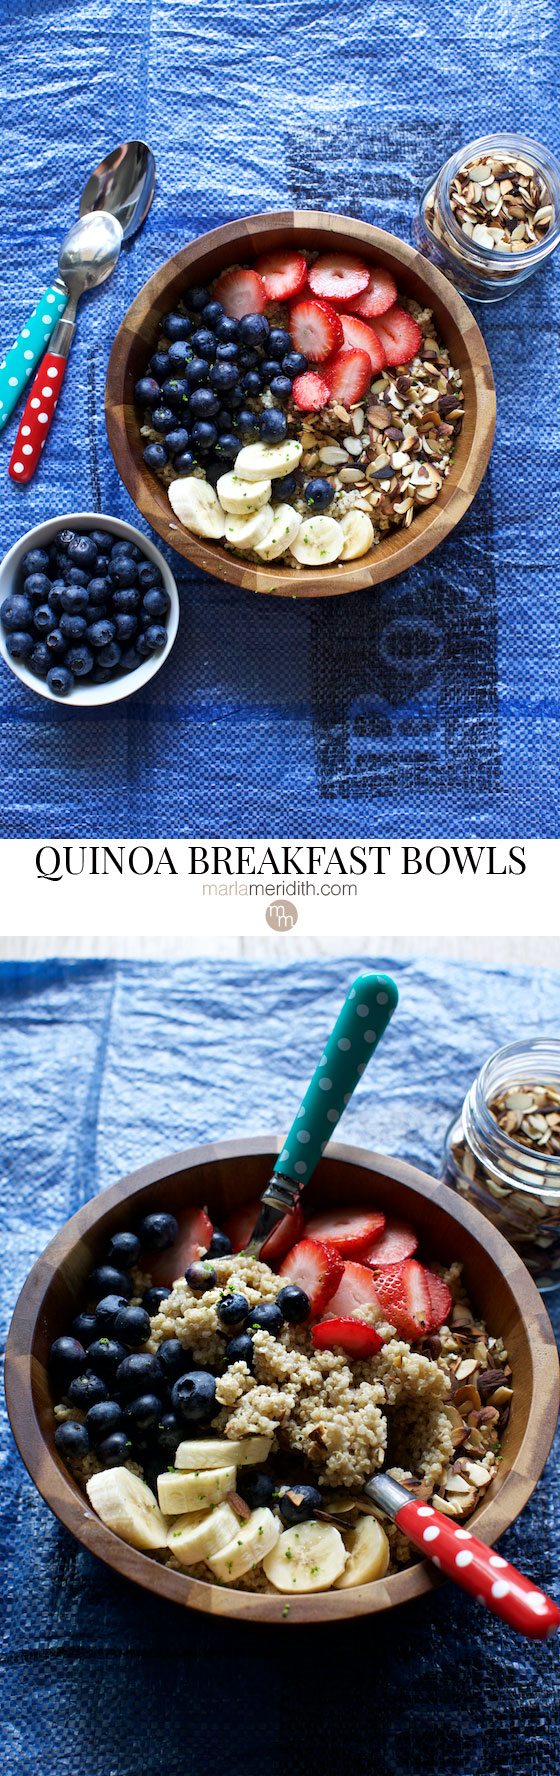 Quinoa Breakfast Bowls. Our favorite gluten-free breakfast recipe! MarlaMeridith.com ( @marlameridith )